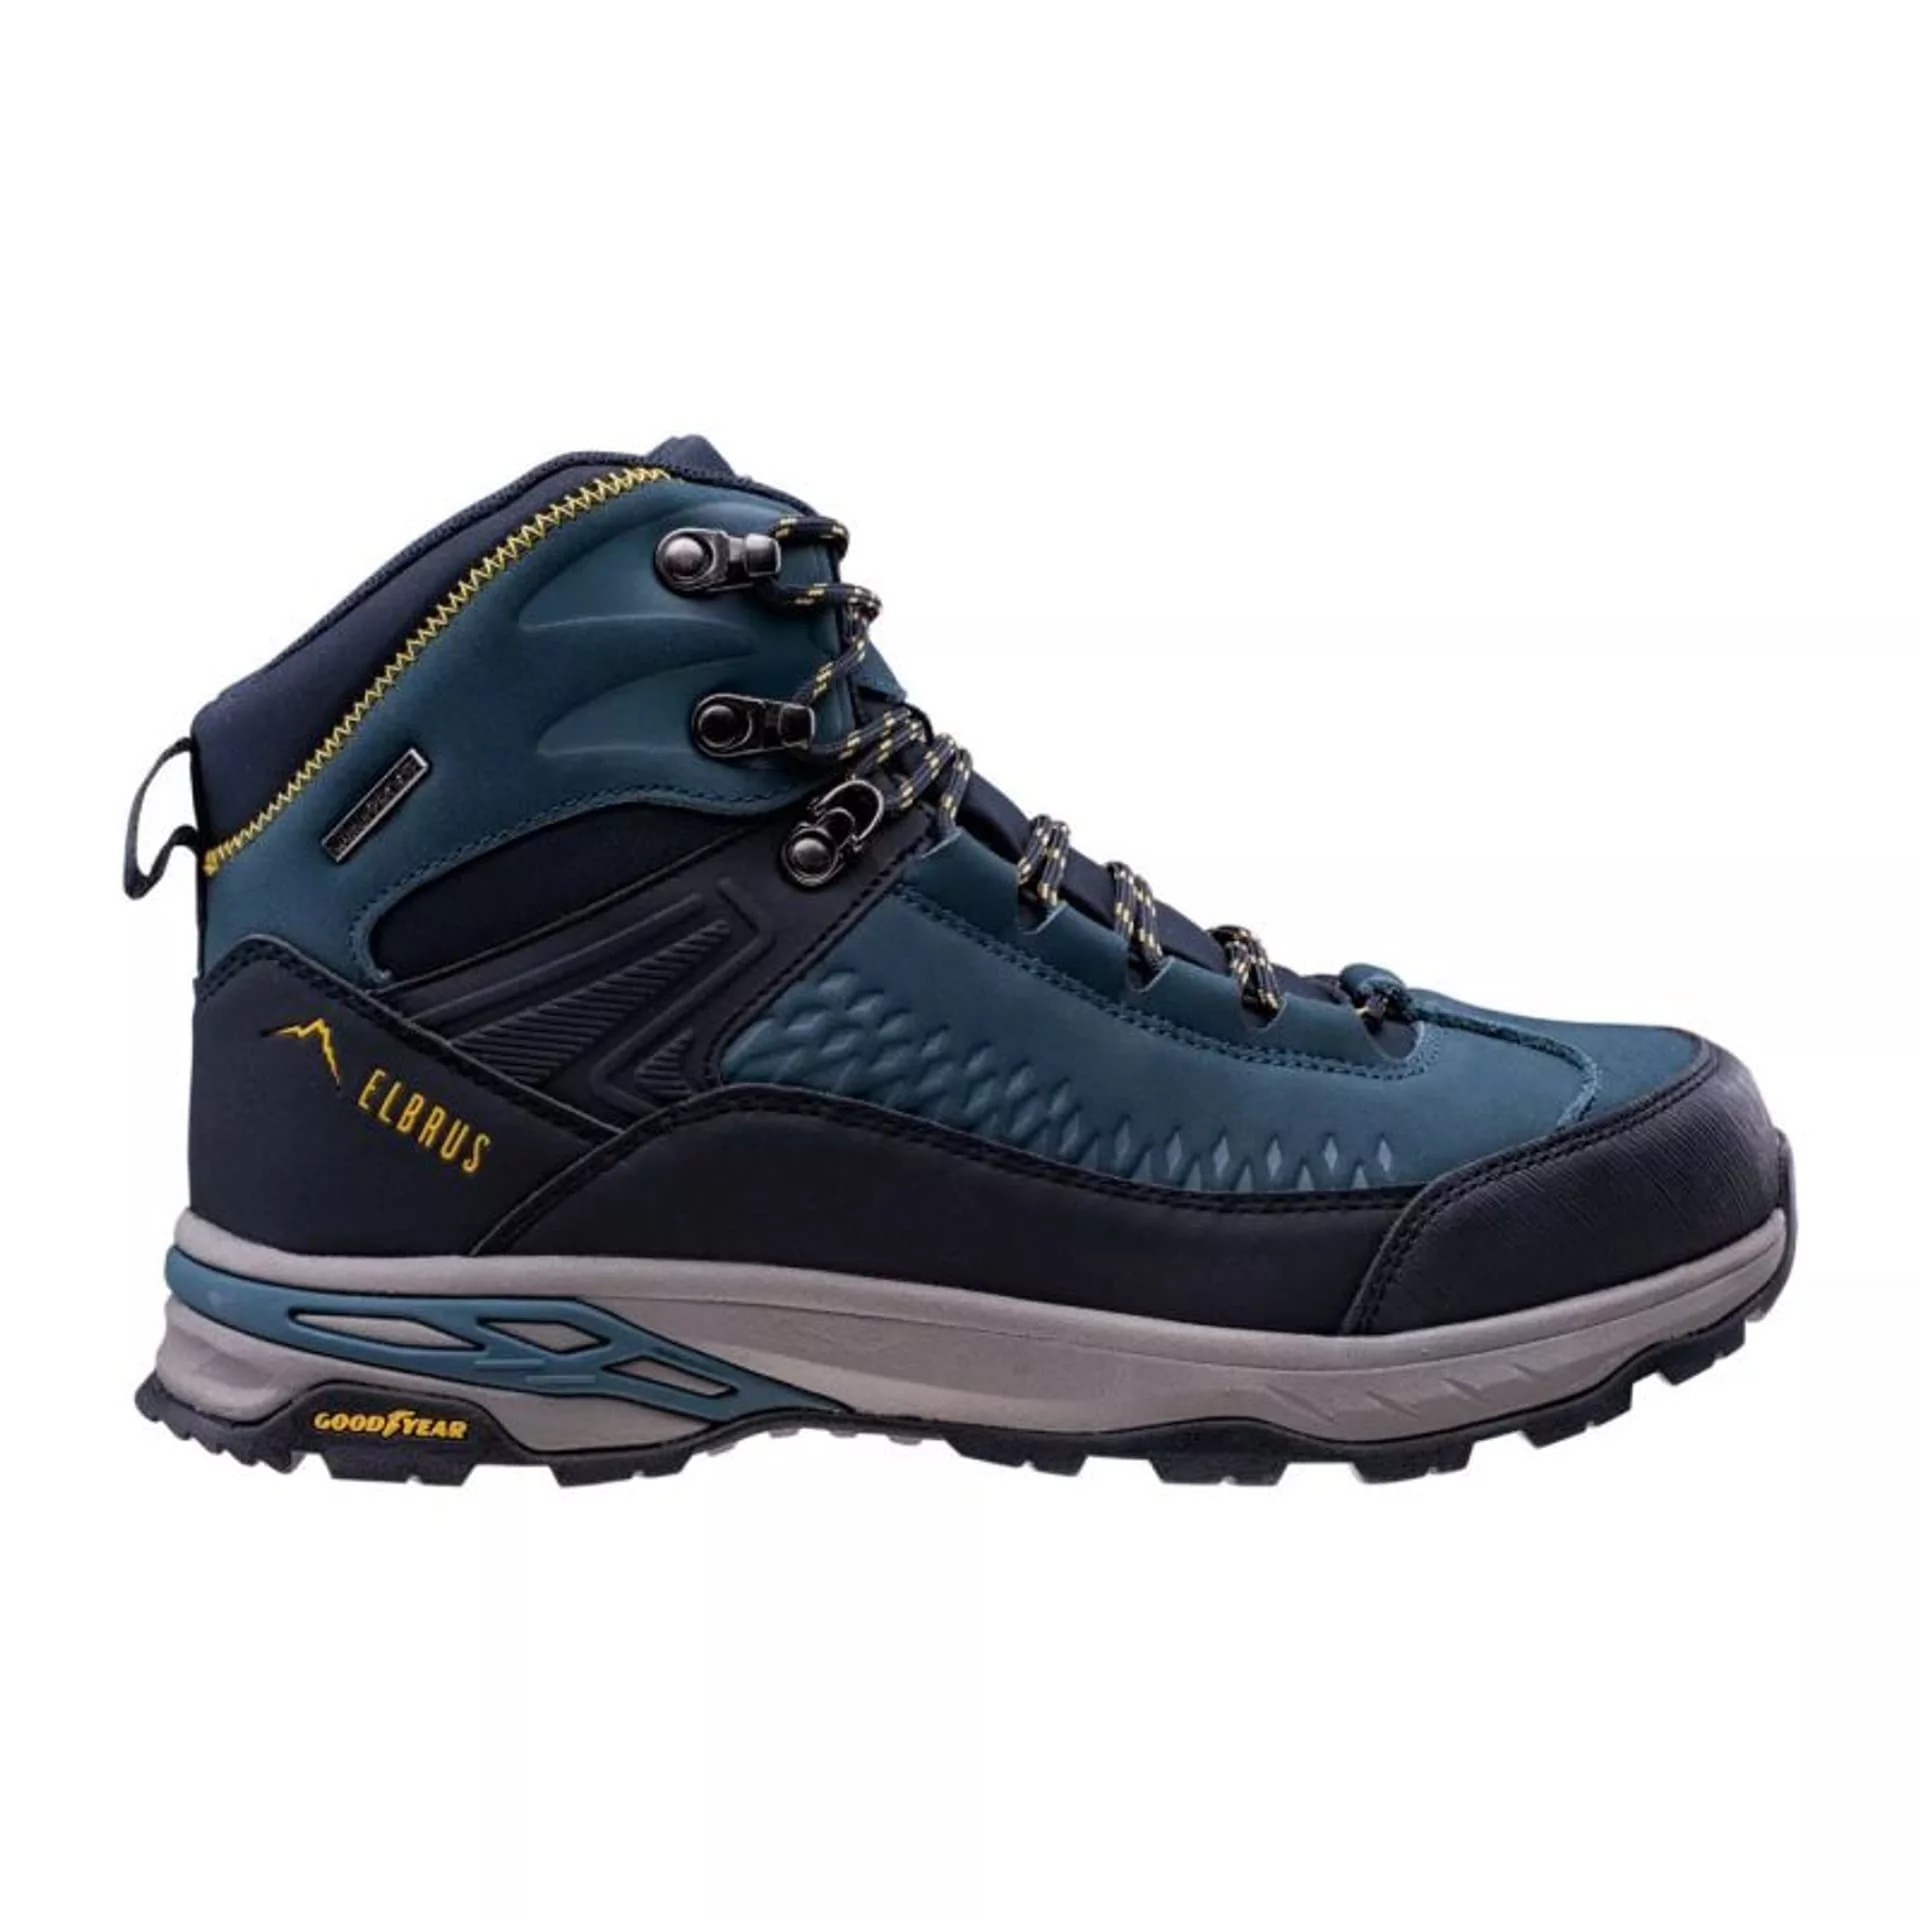 Męskie buty trekkingowe Elbrus Engen MID WP GR granatowe rozmiar 44